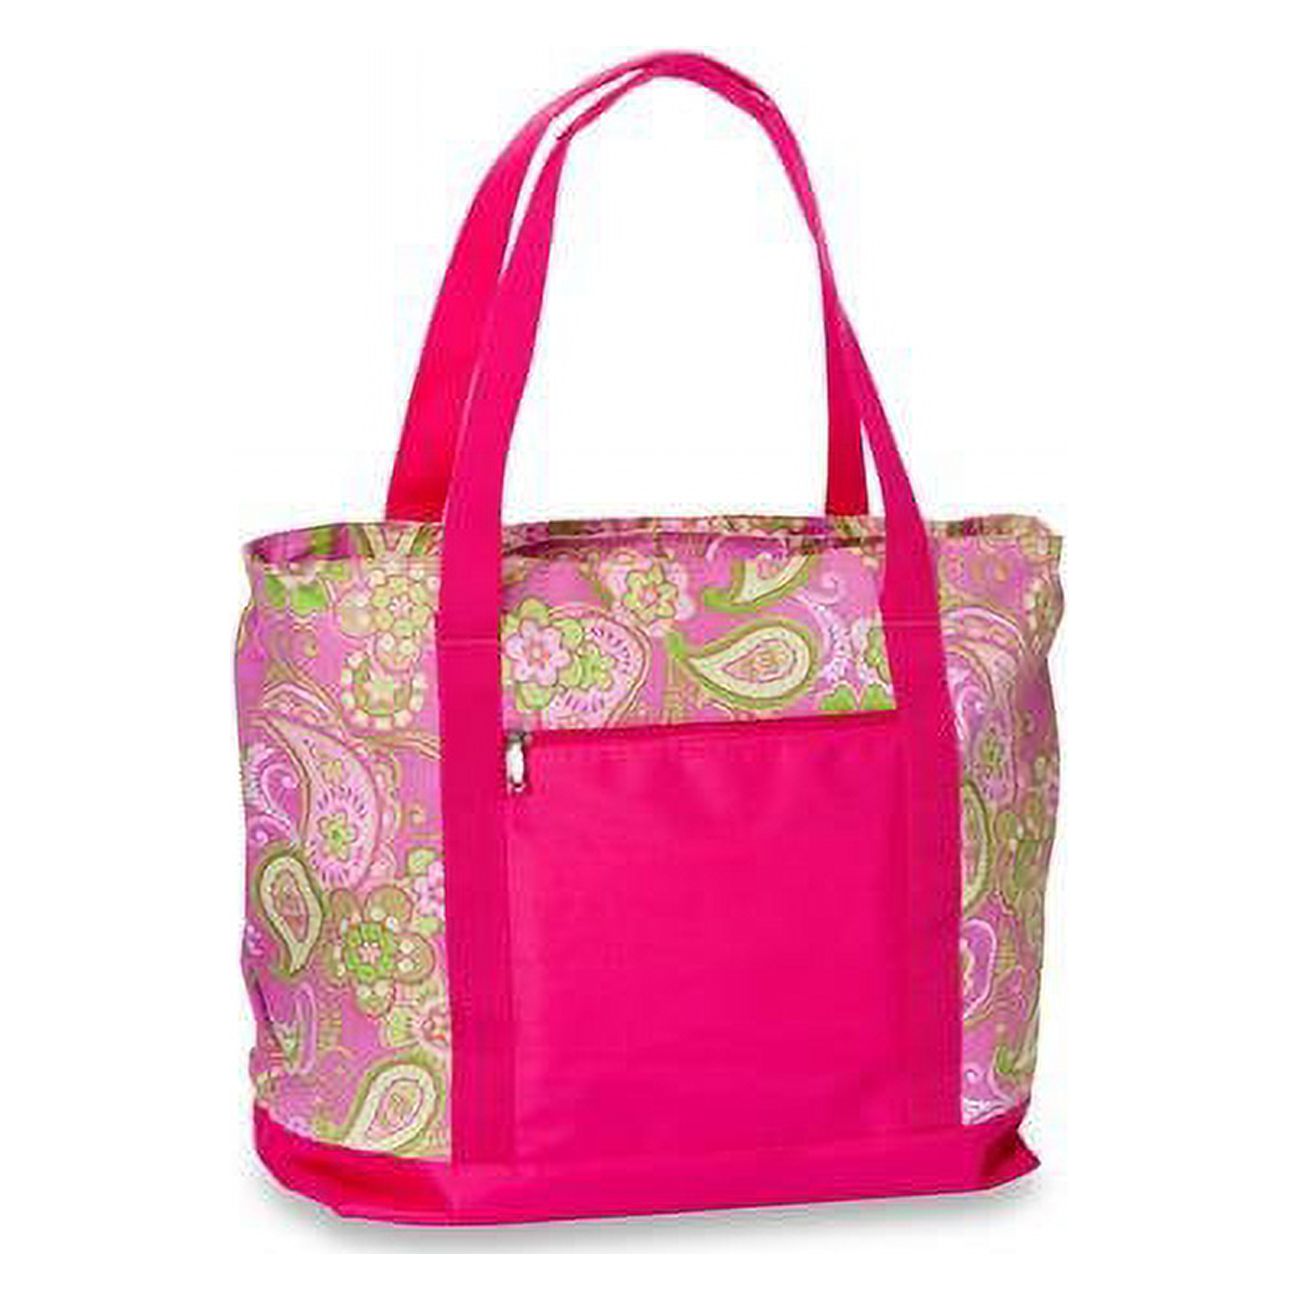 LIDO 2 in 1 cooler bag - Pink Desire - image 1 of 1